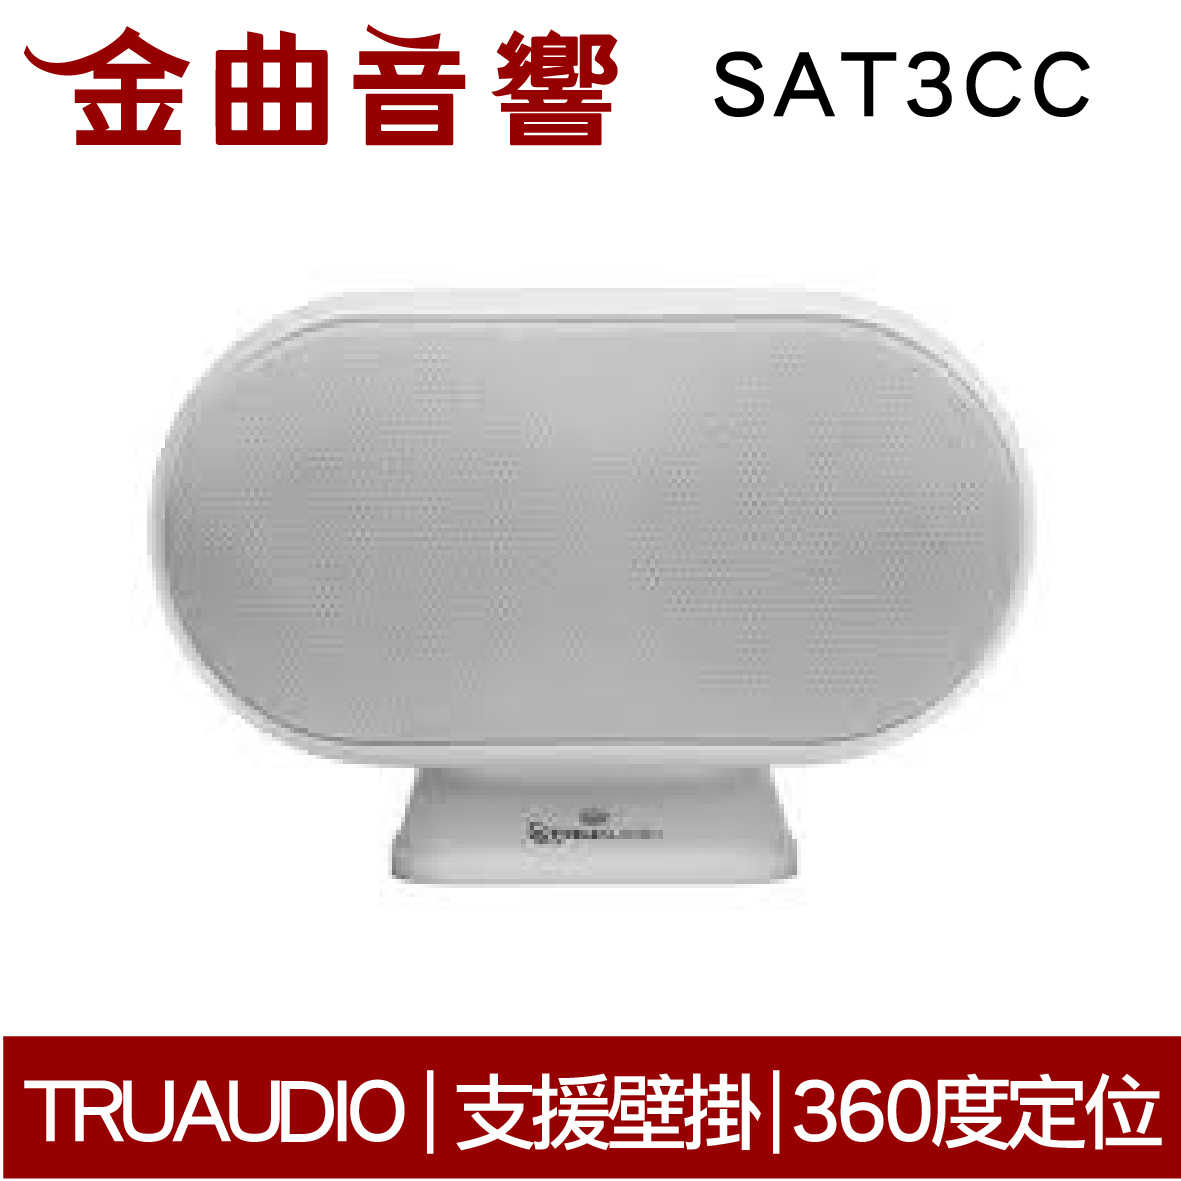 Truaudio SAT3CC 白 360度 支援壁掛 磁性安裝 揚聲器 | 金曲音響